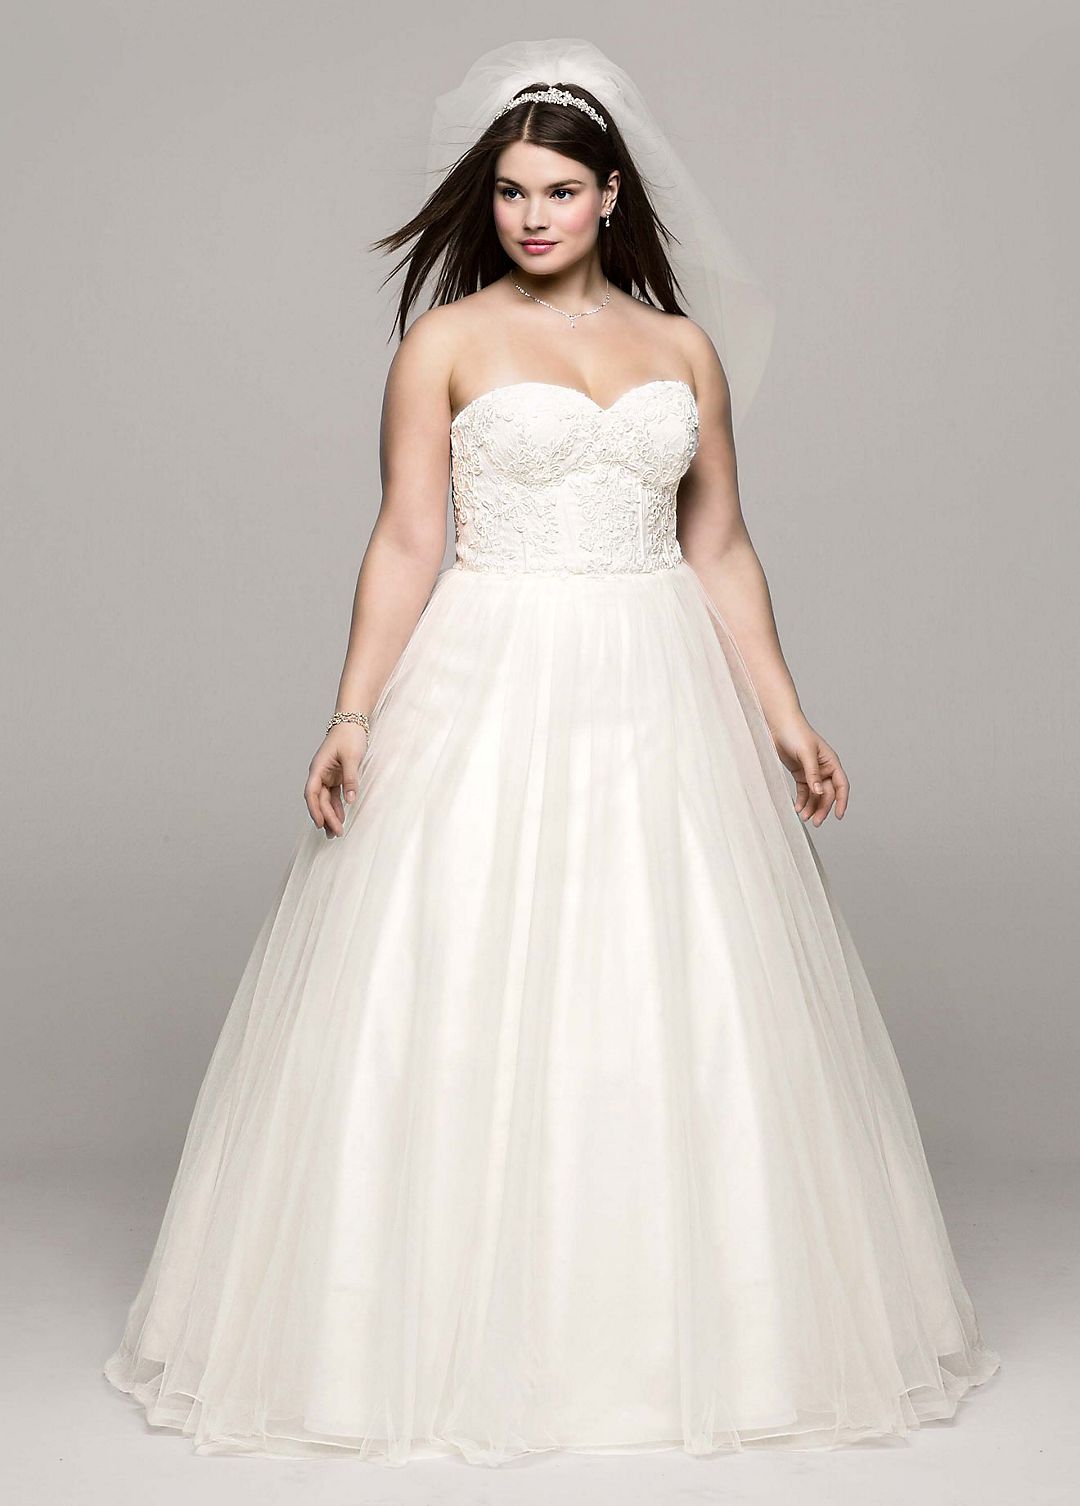 Soft Tulle Lace Corset Plus Size Wedding Dress  Image 1